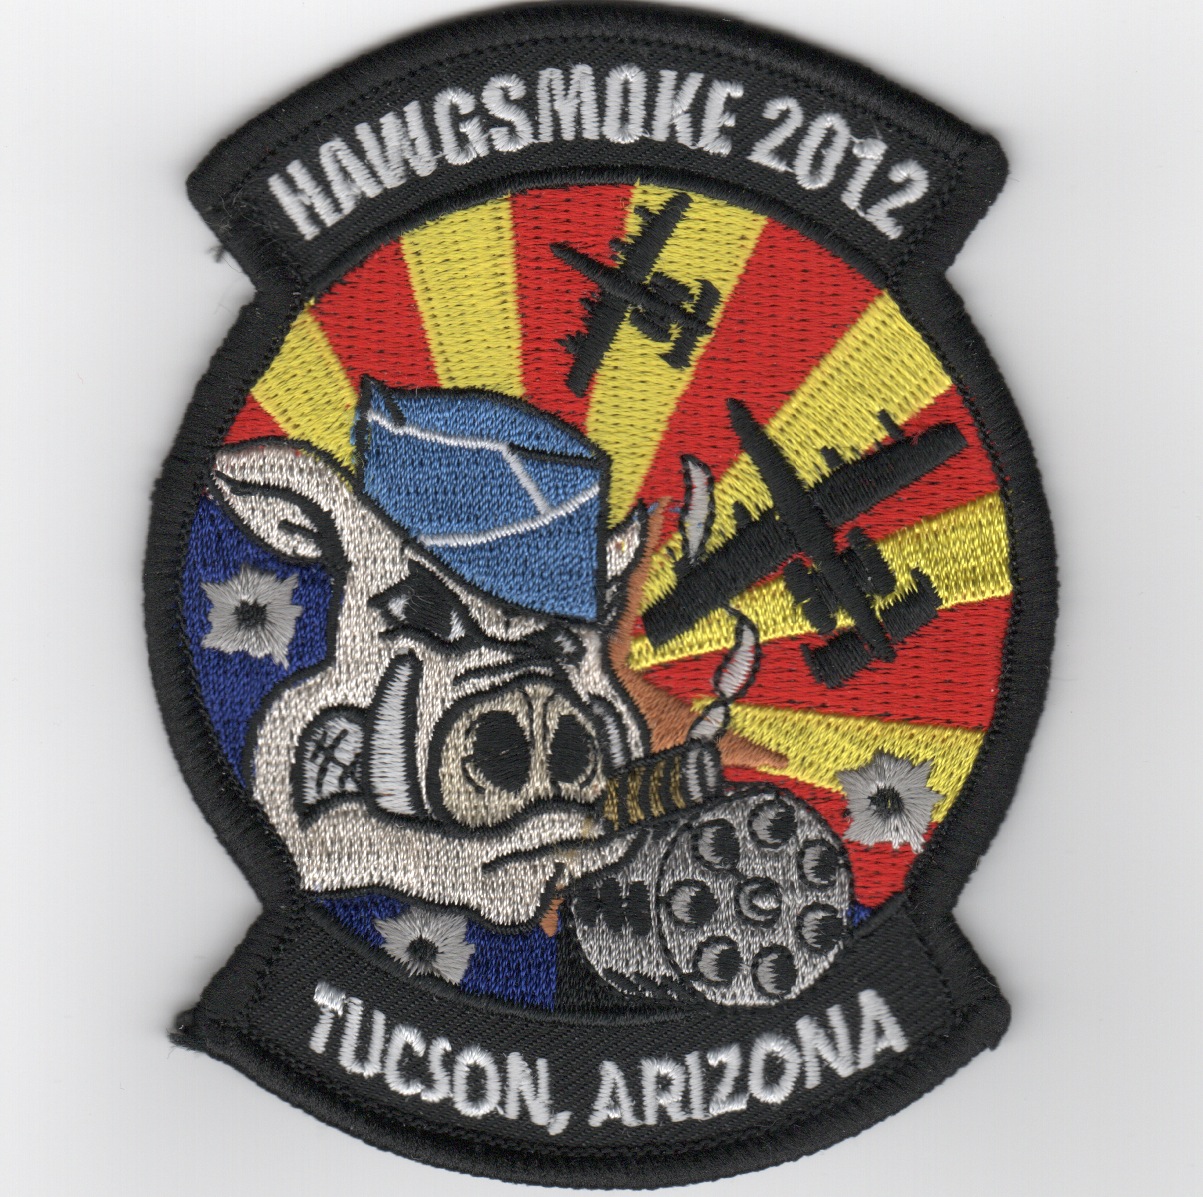 A-10's Hawgsmoke 2012